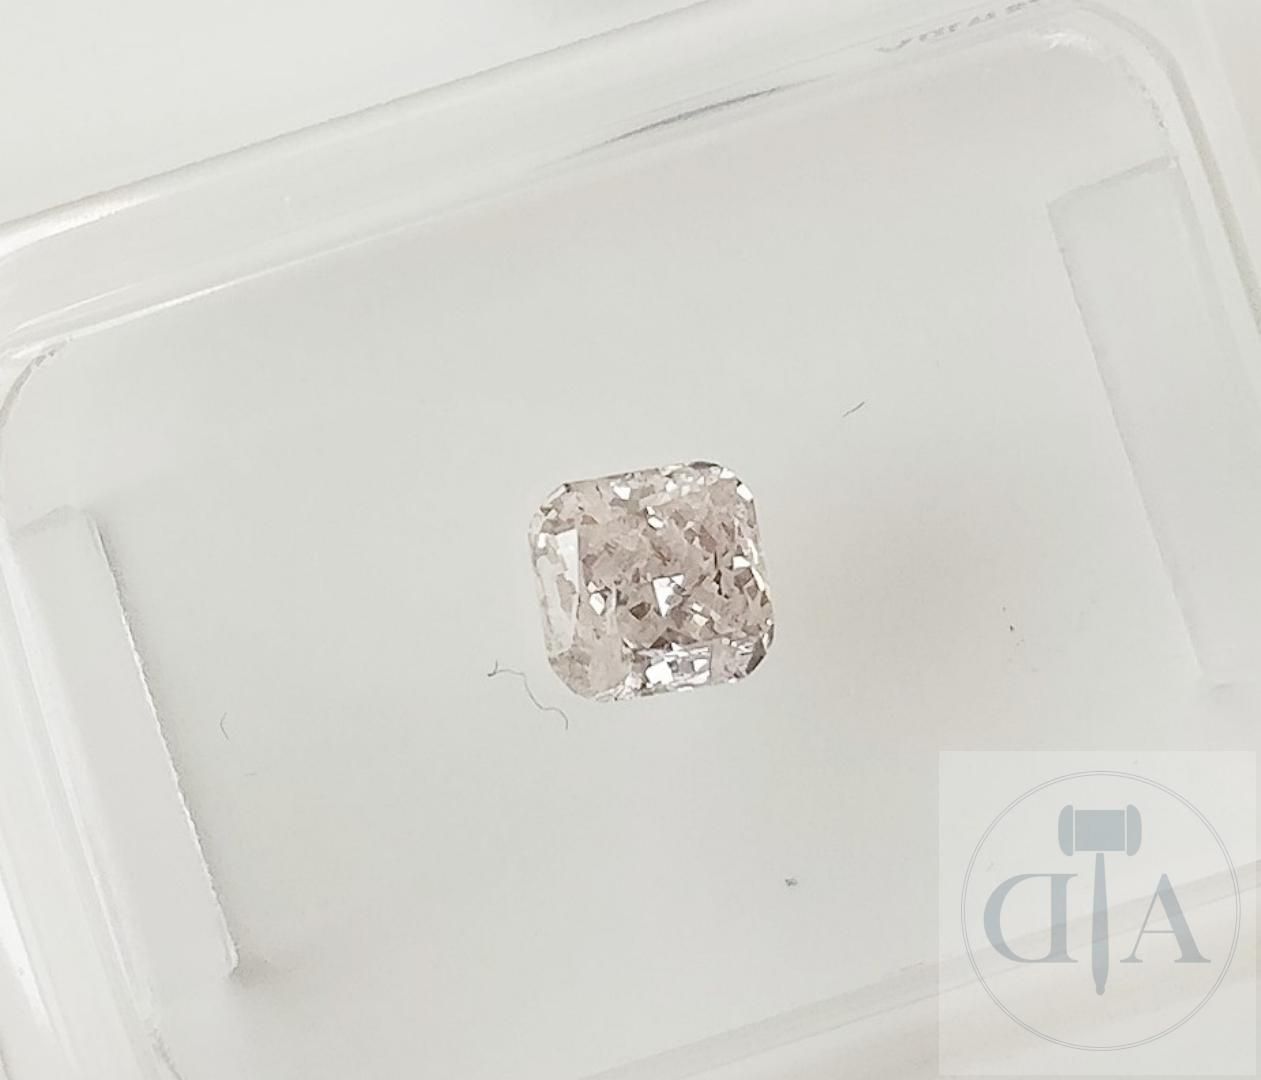 Null "0.37 克拉 ALGT 认证钻石- ALGT 证书编号 50943110 
- 形状：枕形枕形
- 克拉重量： 0.37 克拉 
- 颜色：浅粉色&hellip;